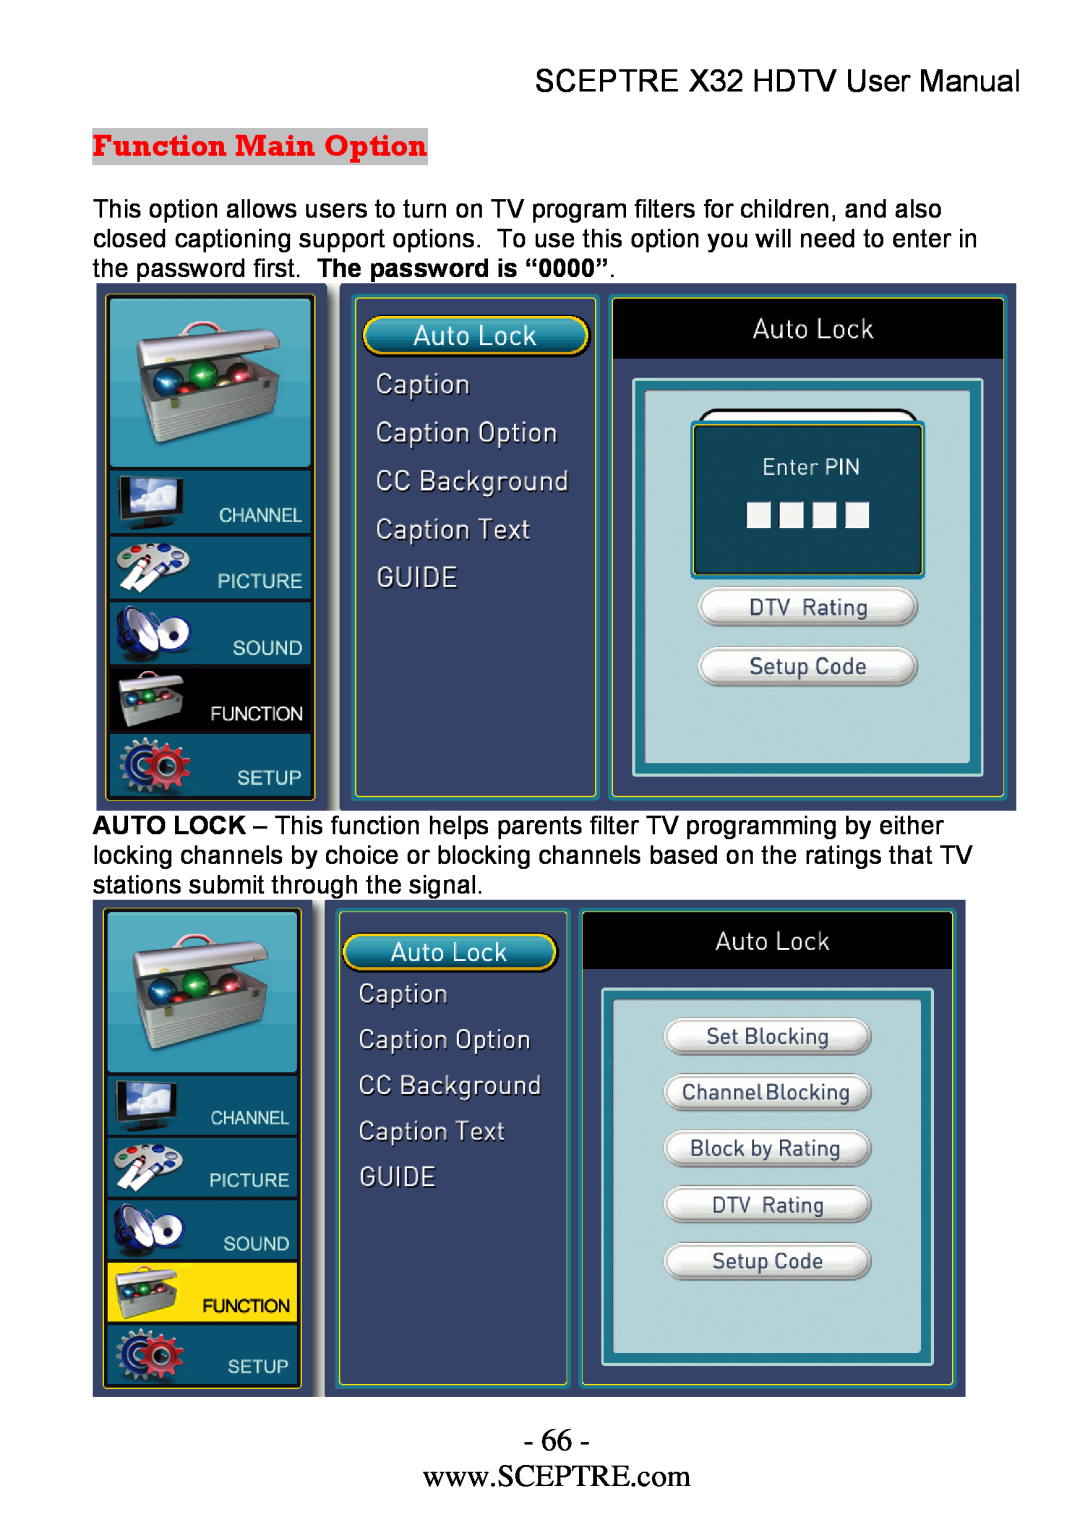 Sceptre Technologies x32 user manual Function Main Option, SCEPTRE X32 HDTV User Manual 